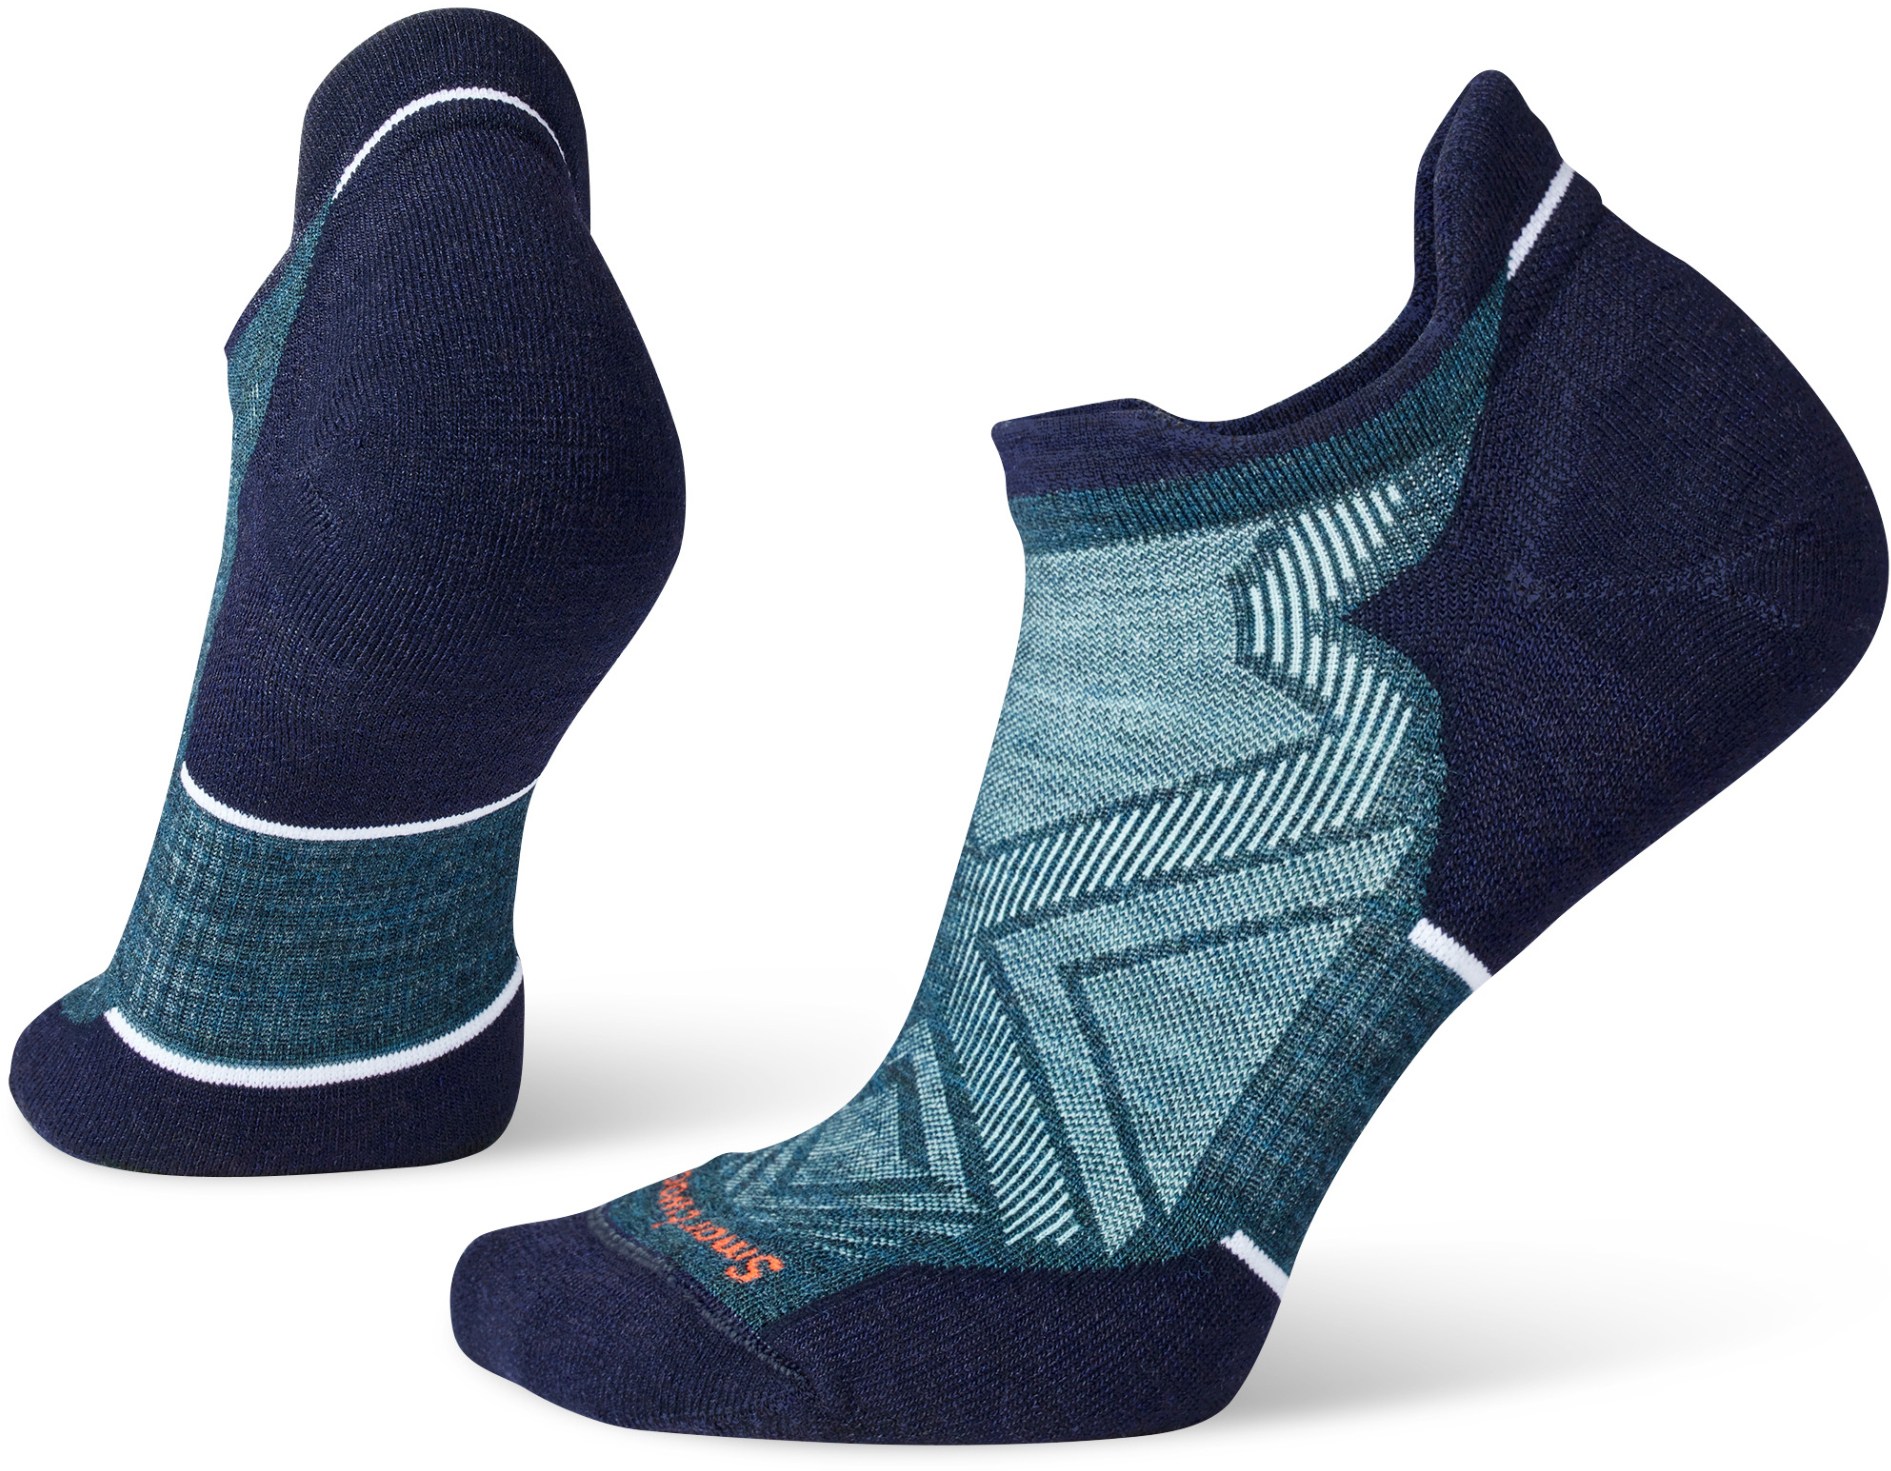 Носки до щиколотки Performance Run Targeted Cushion — женские Smartwool, синий носки для бега smartwool performance run zero cushion low ankle цвет light gray